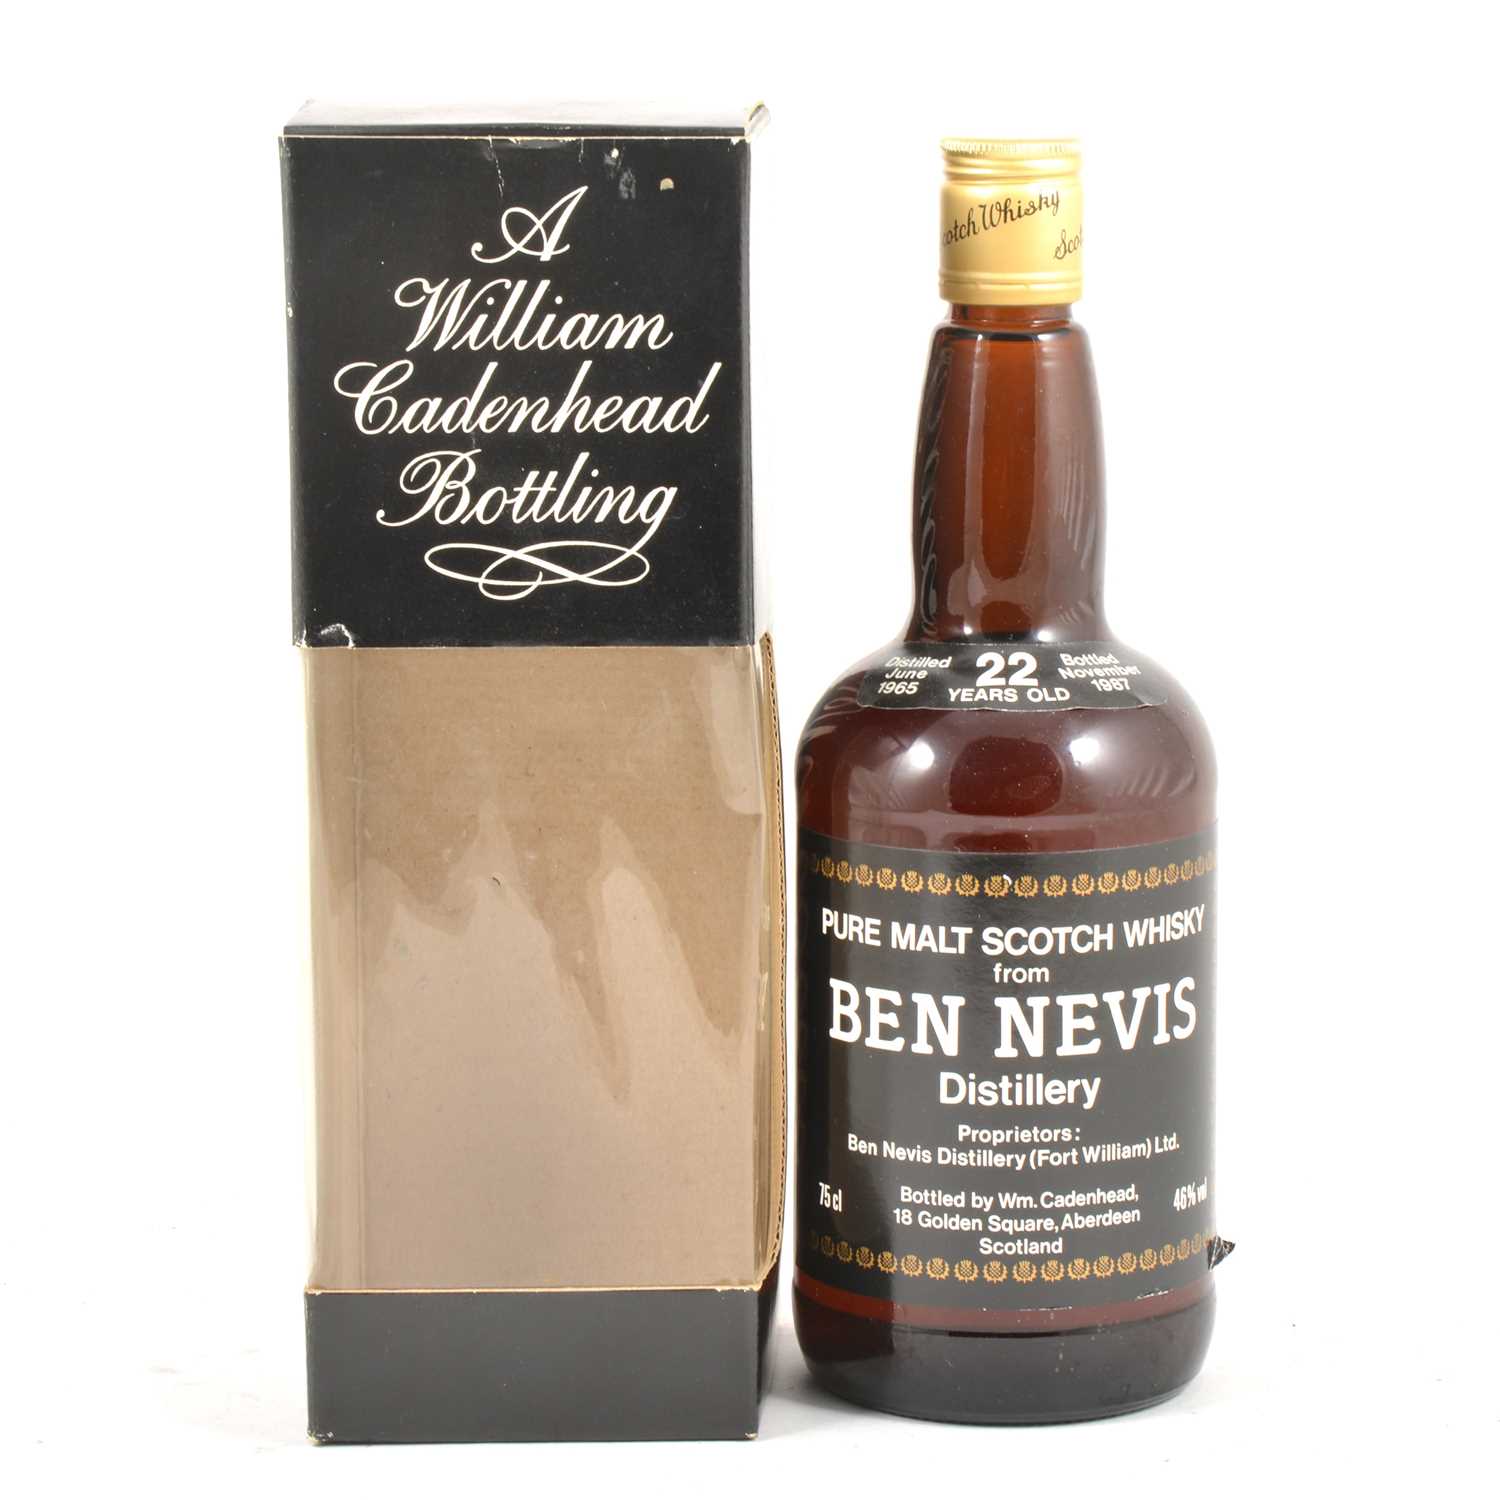 357 - Ben Nevis 1965, 22 year old, Cadenhead bottling, single Highland malt Scotch whisky